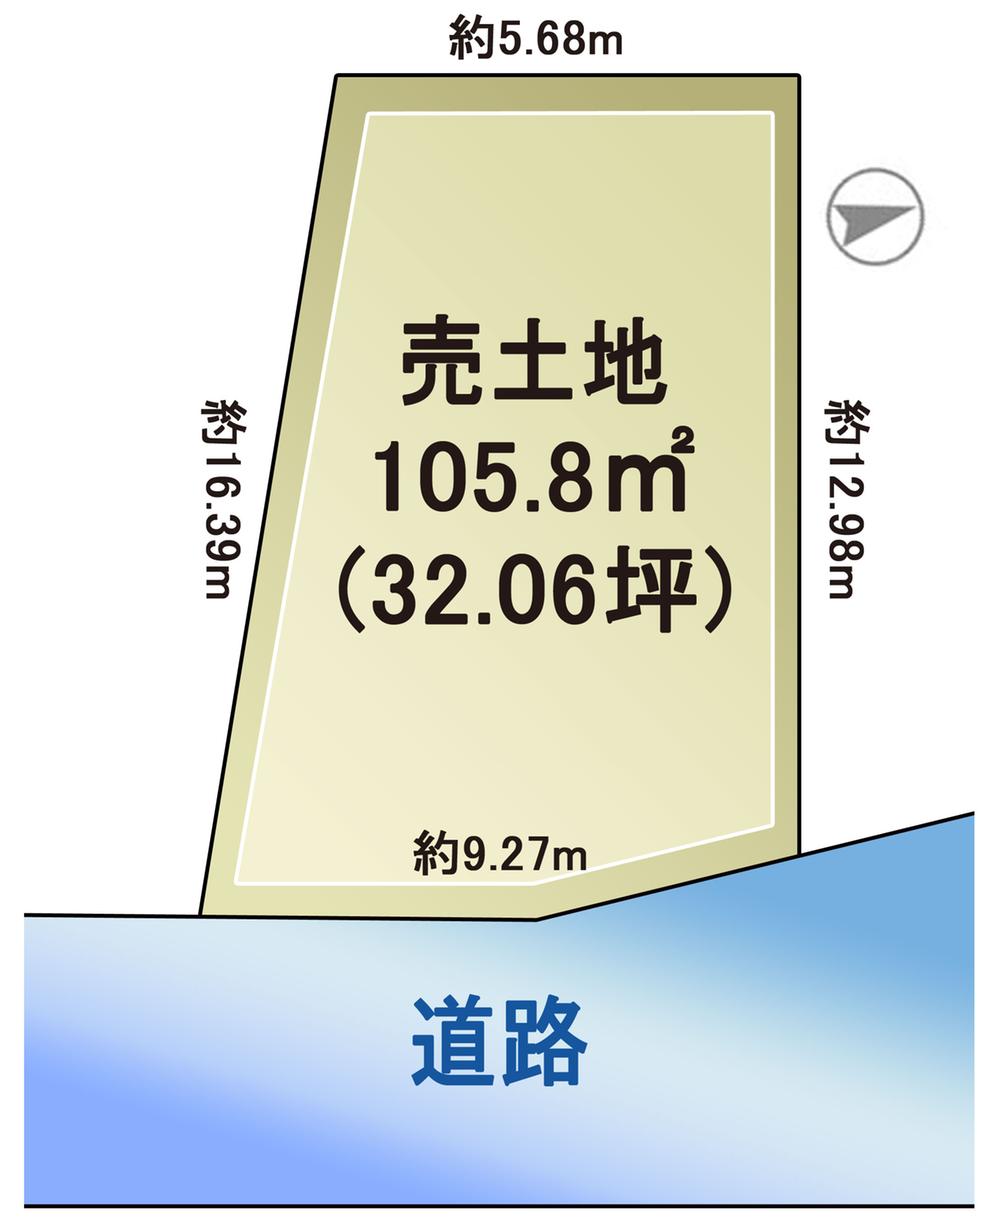 Compartment figure. Land price 13.8 million yen, Land area 105.8 sq m